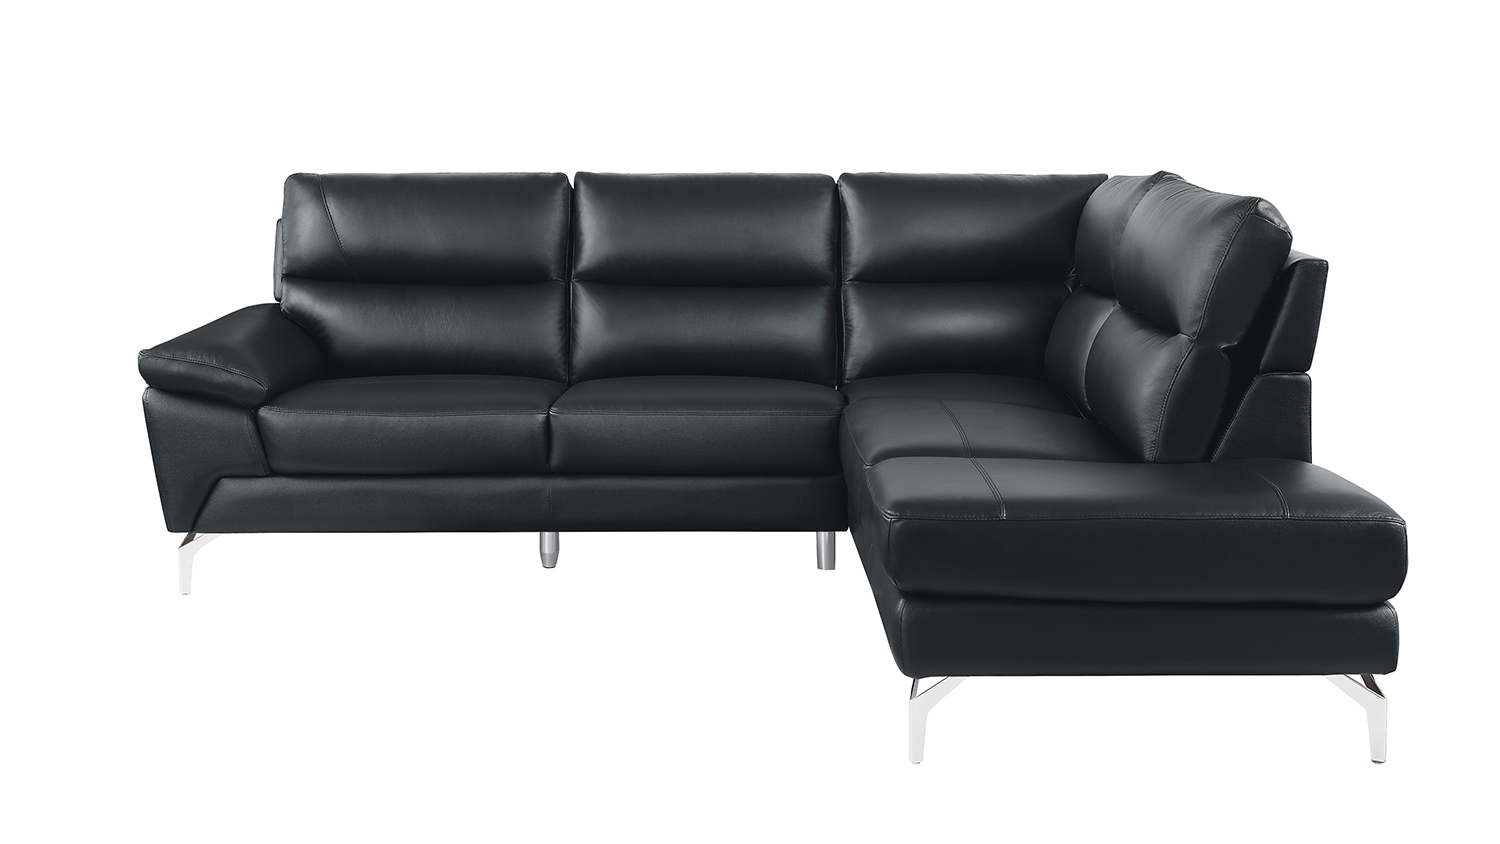 Homelegance Cairn Sectional Sofa Set - Black